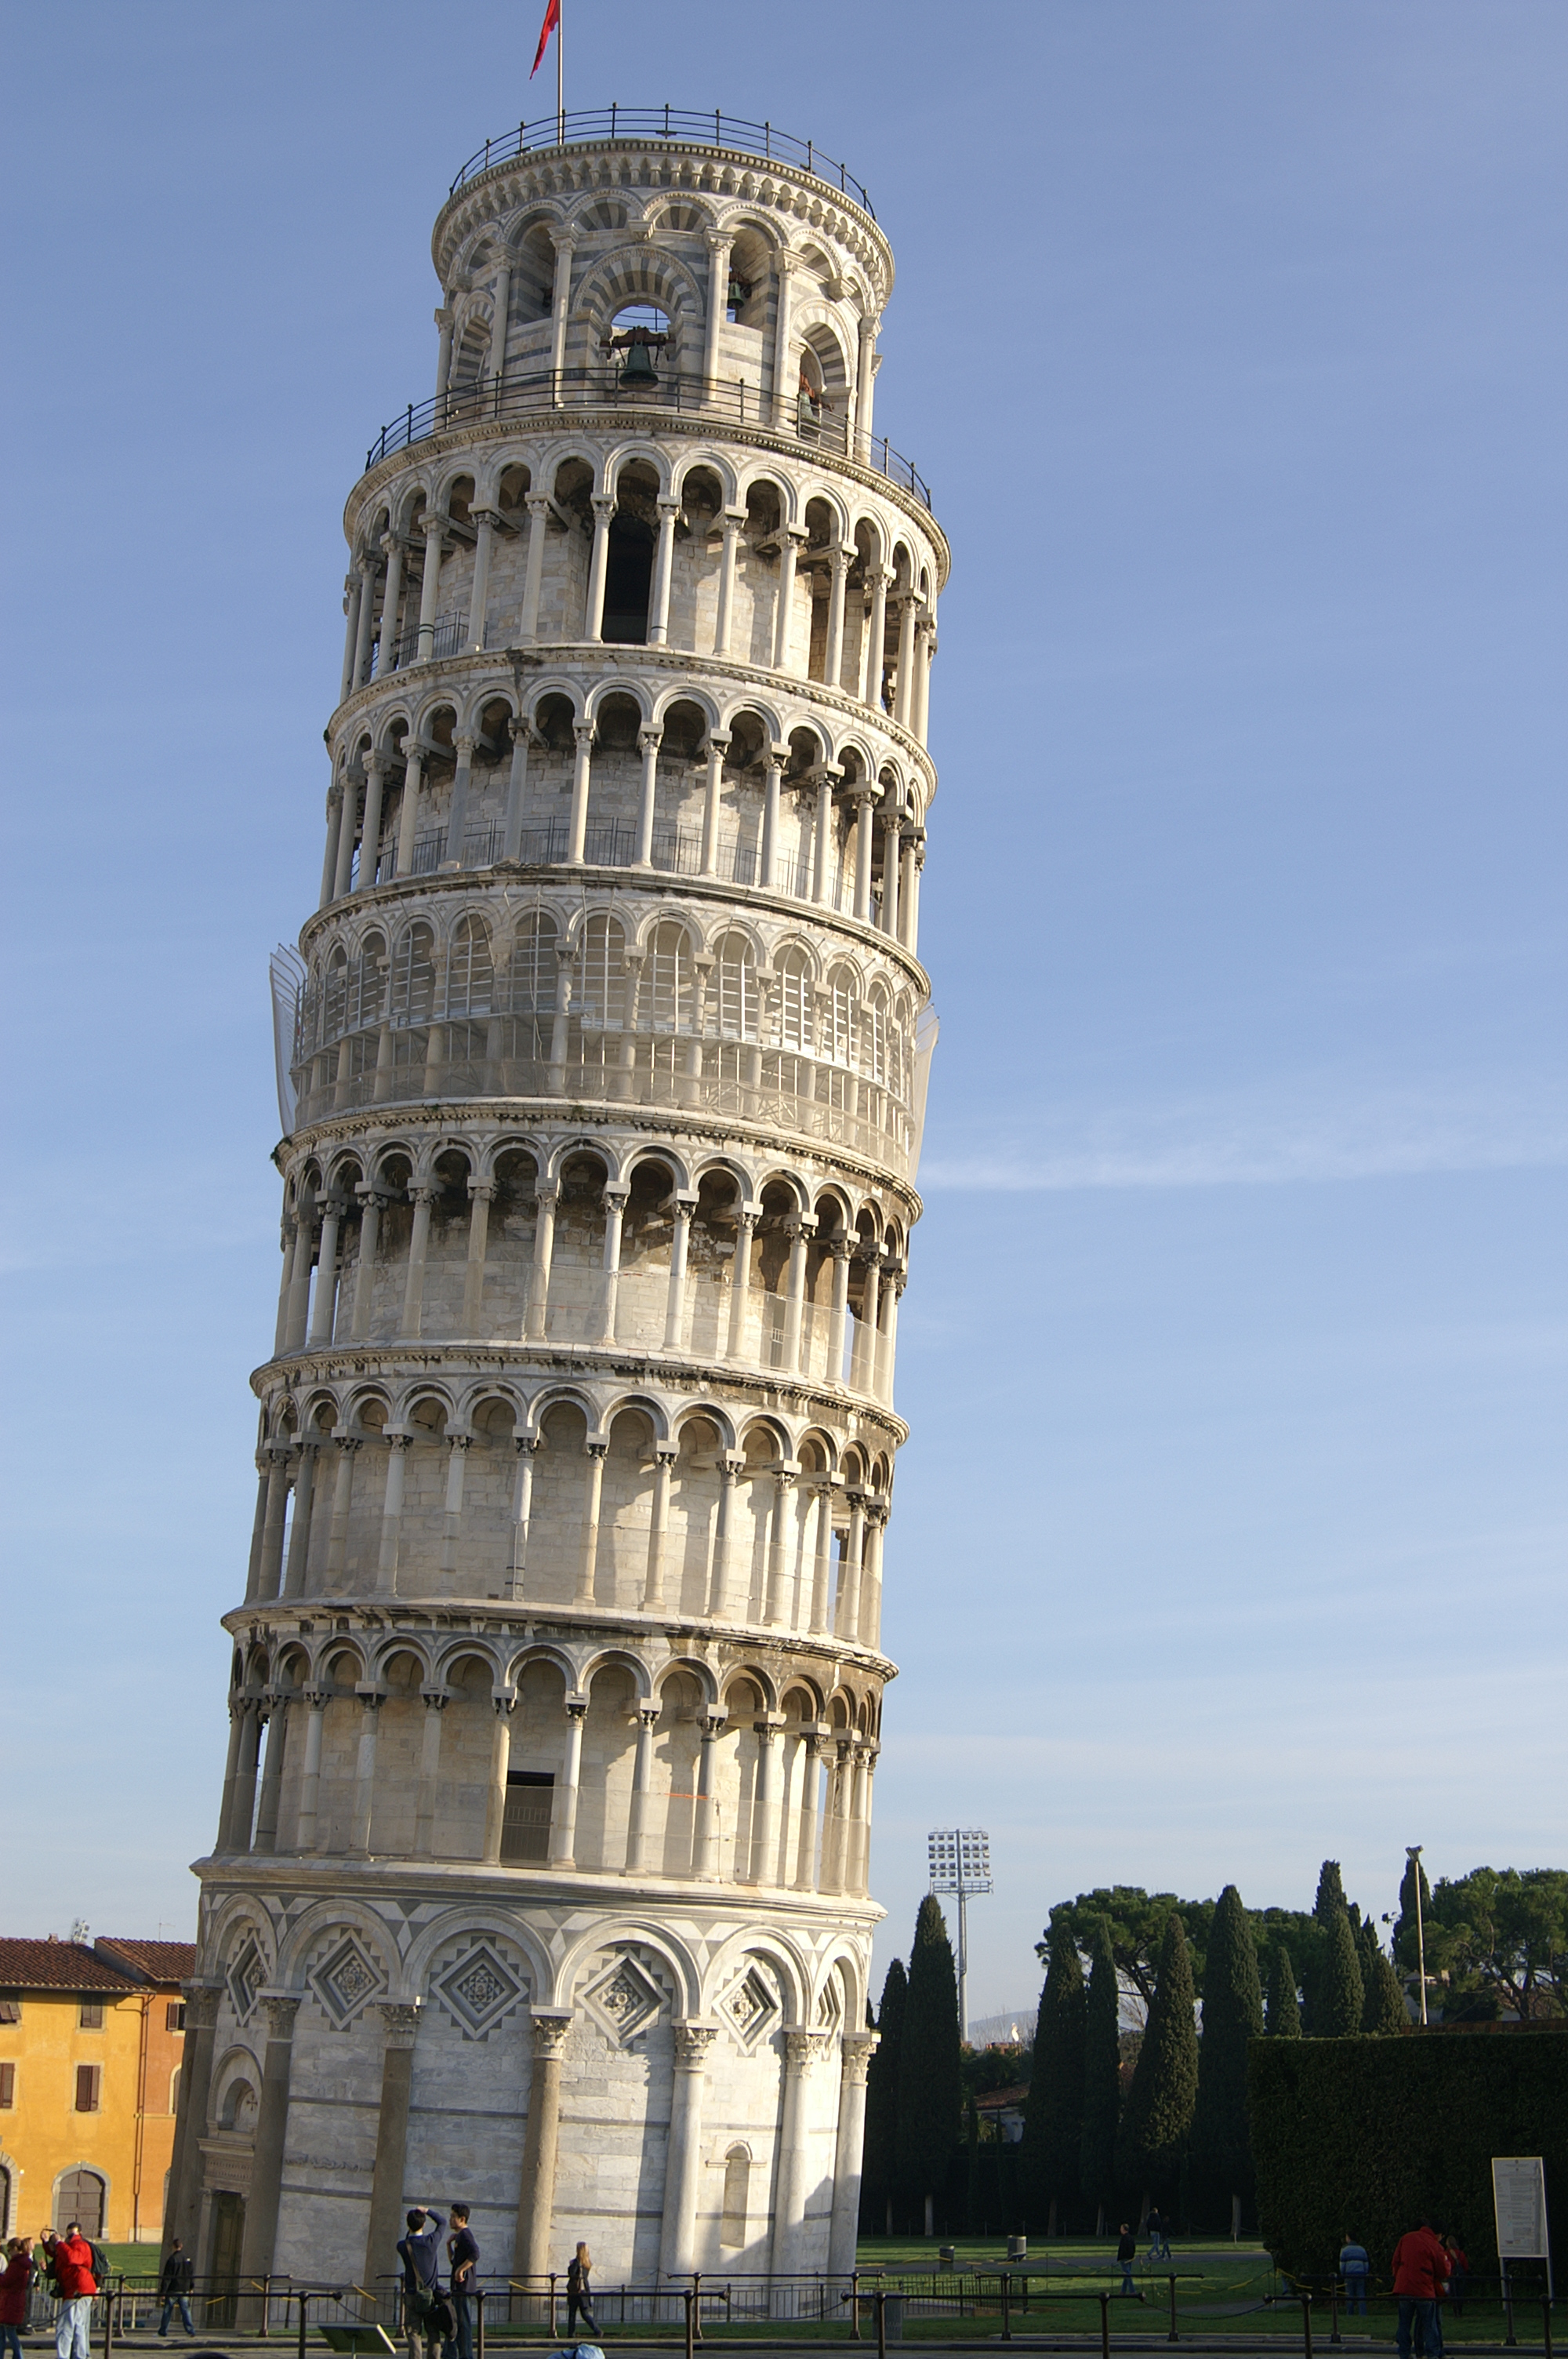 http://upload.wikimedia.org/wikipedia/commons/9/9f/Leaning_Tower_of_Pisa_(1).jpg